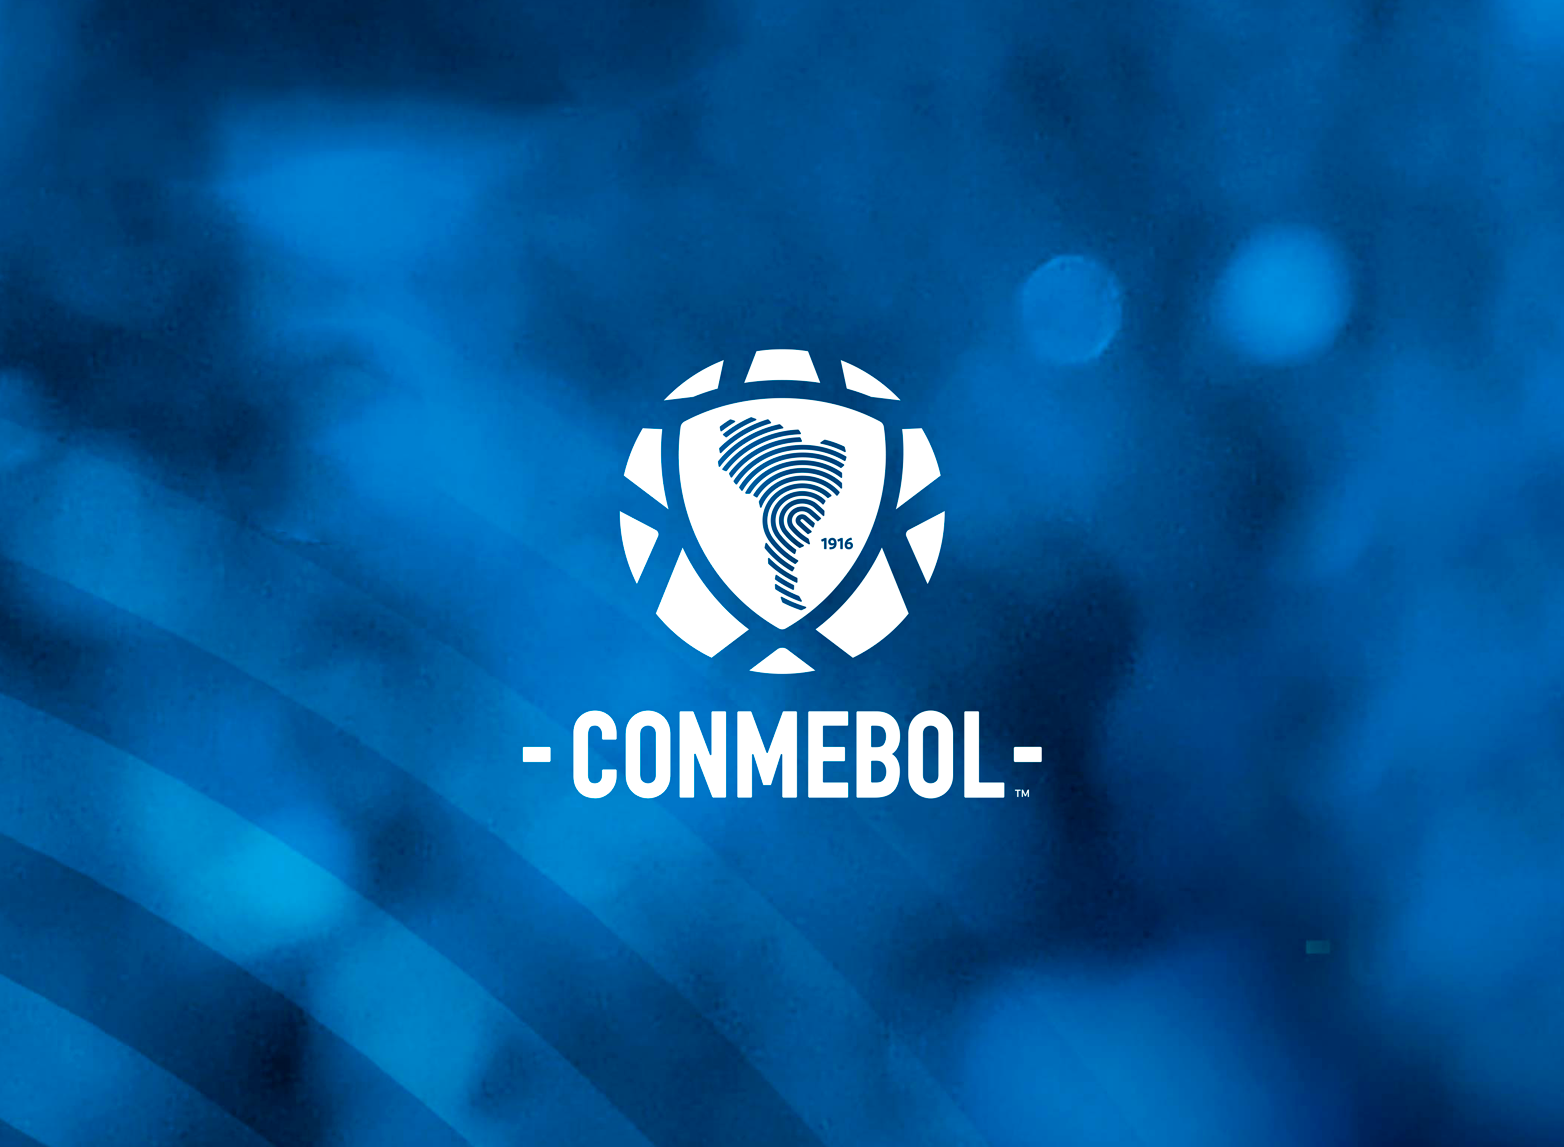 www.conmebol.com